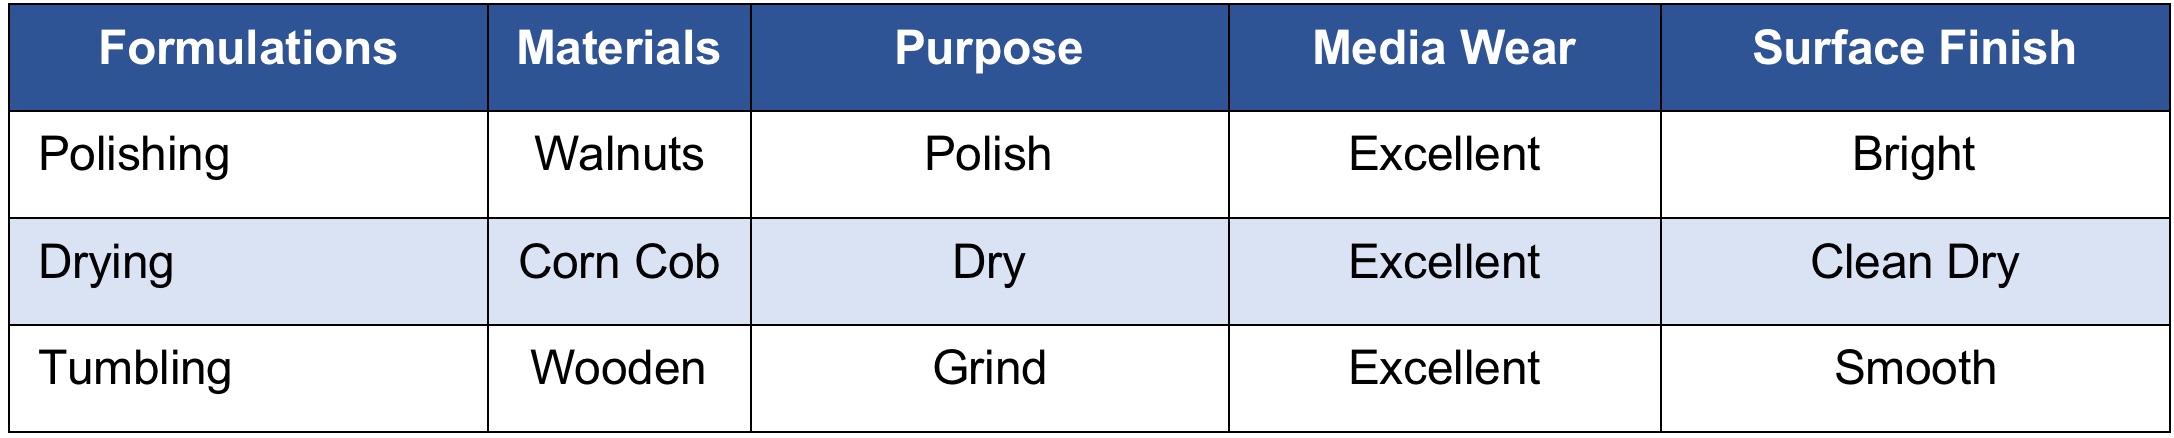 Dry finishing media formula